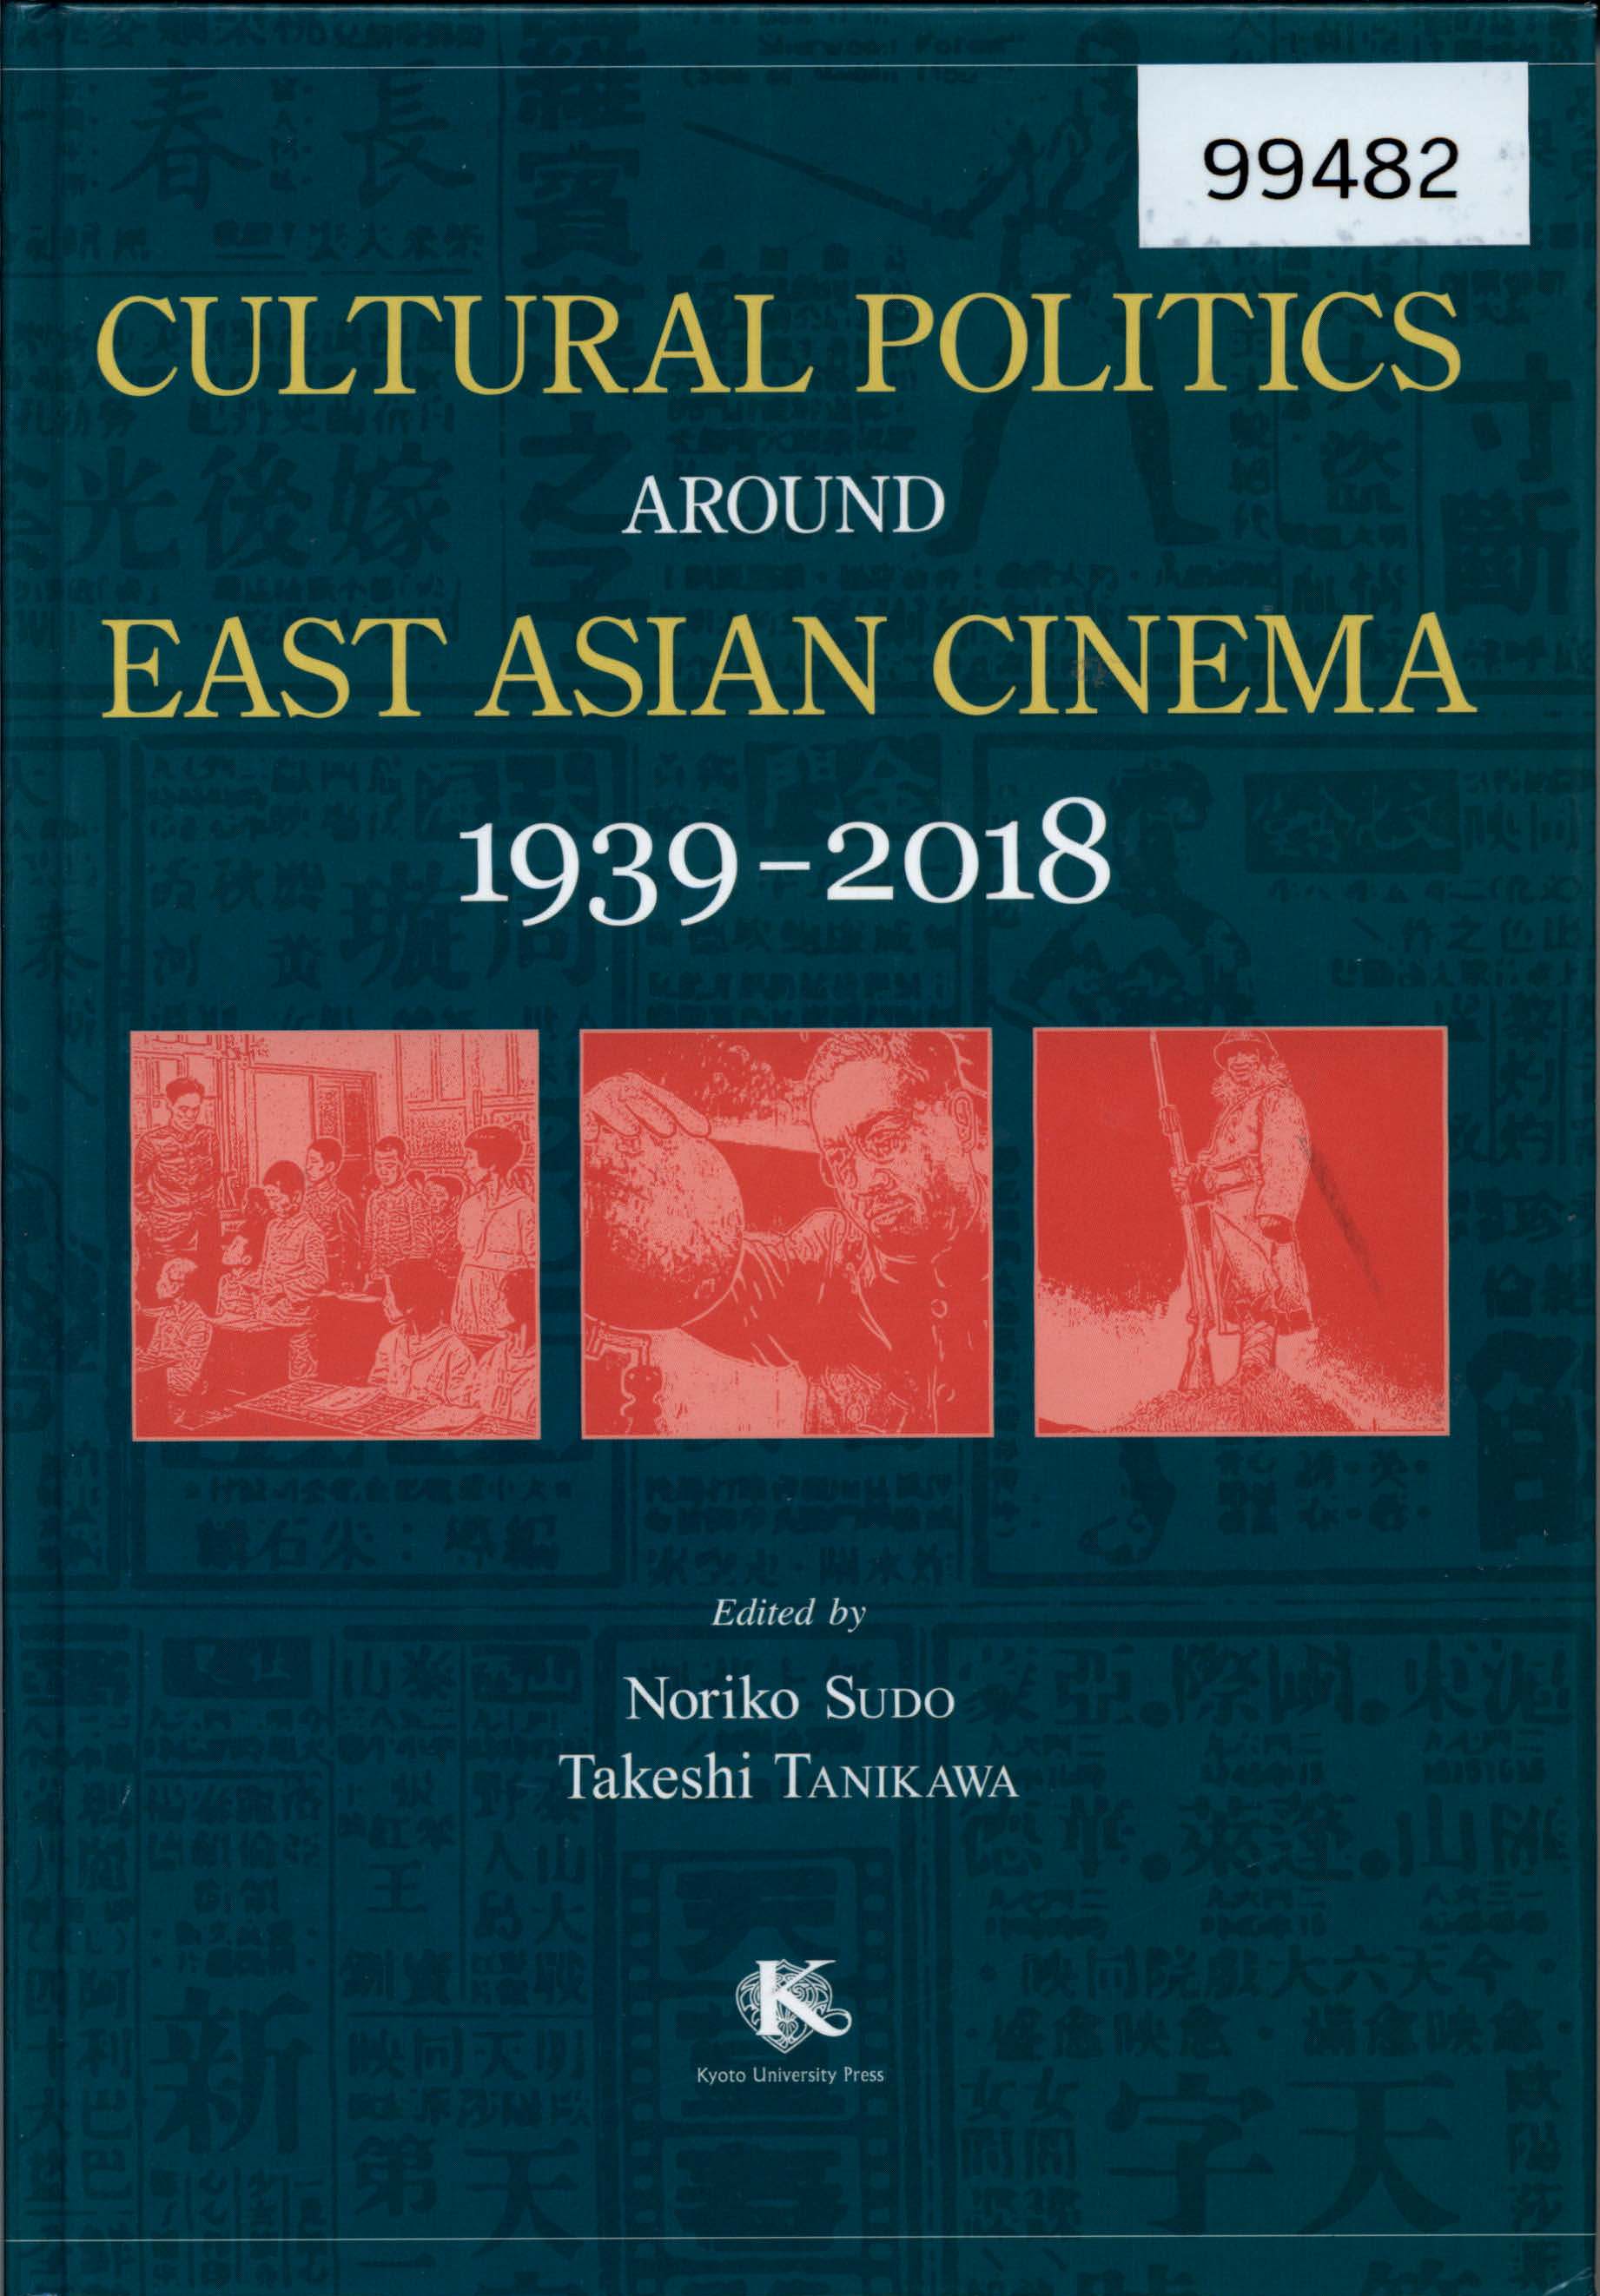 Cultural politics around East Asian cinema 1939-2018